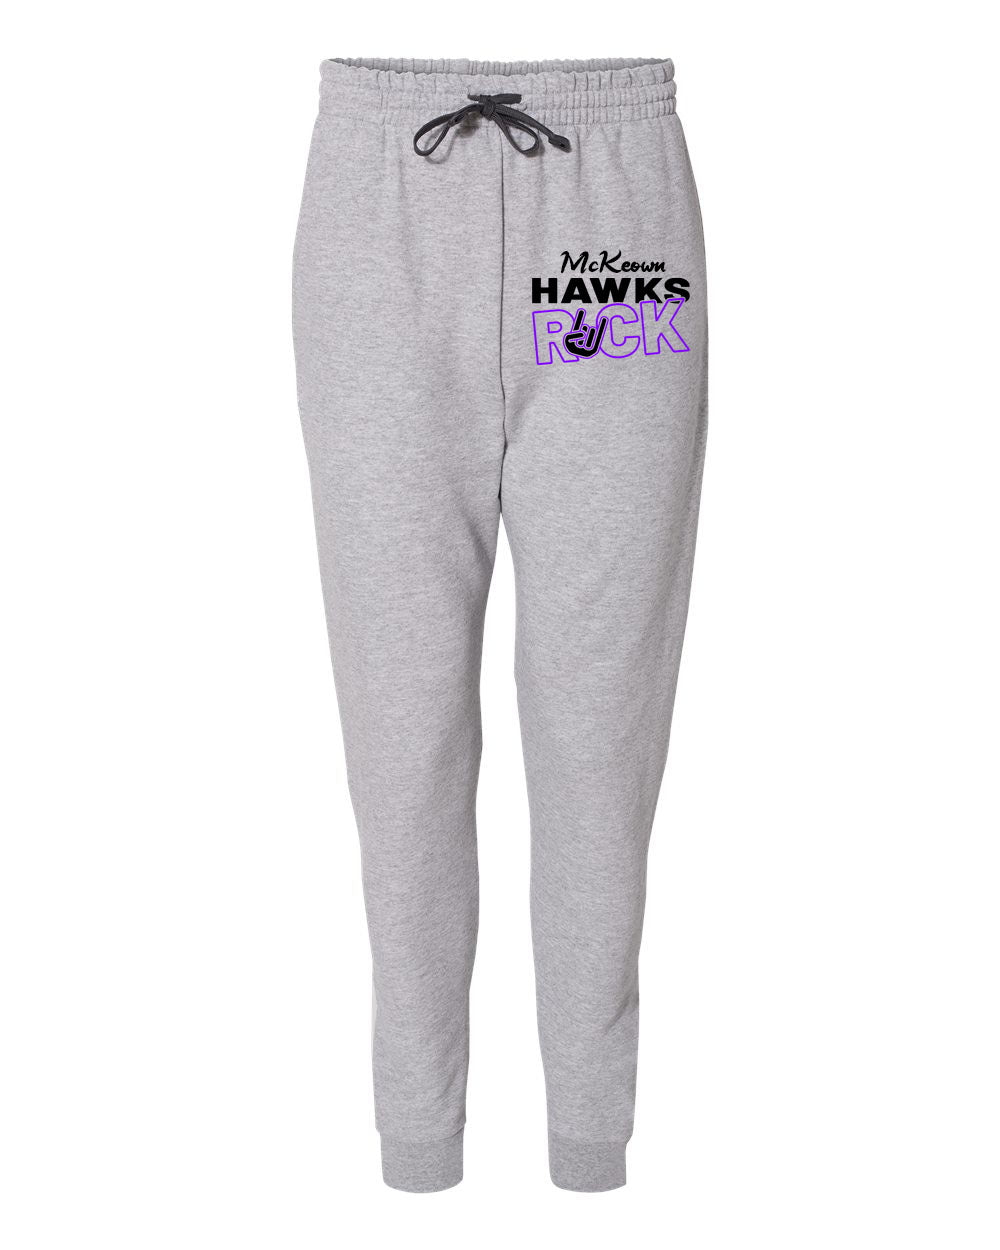 McKeown Hawks Rock Sweatpants